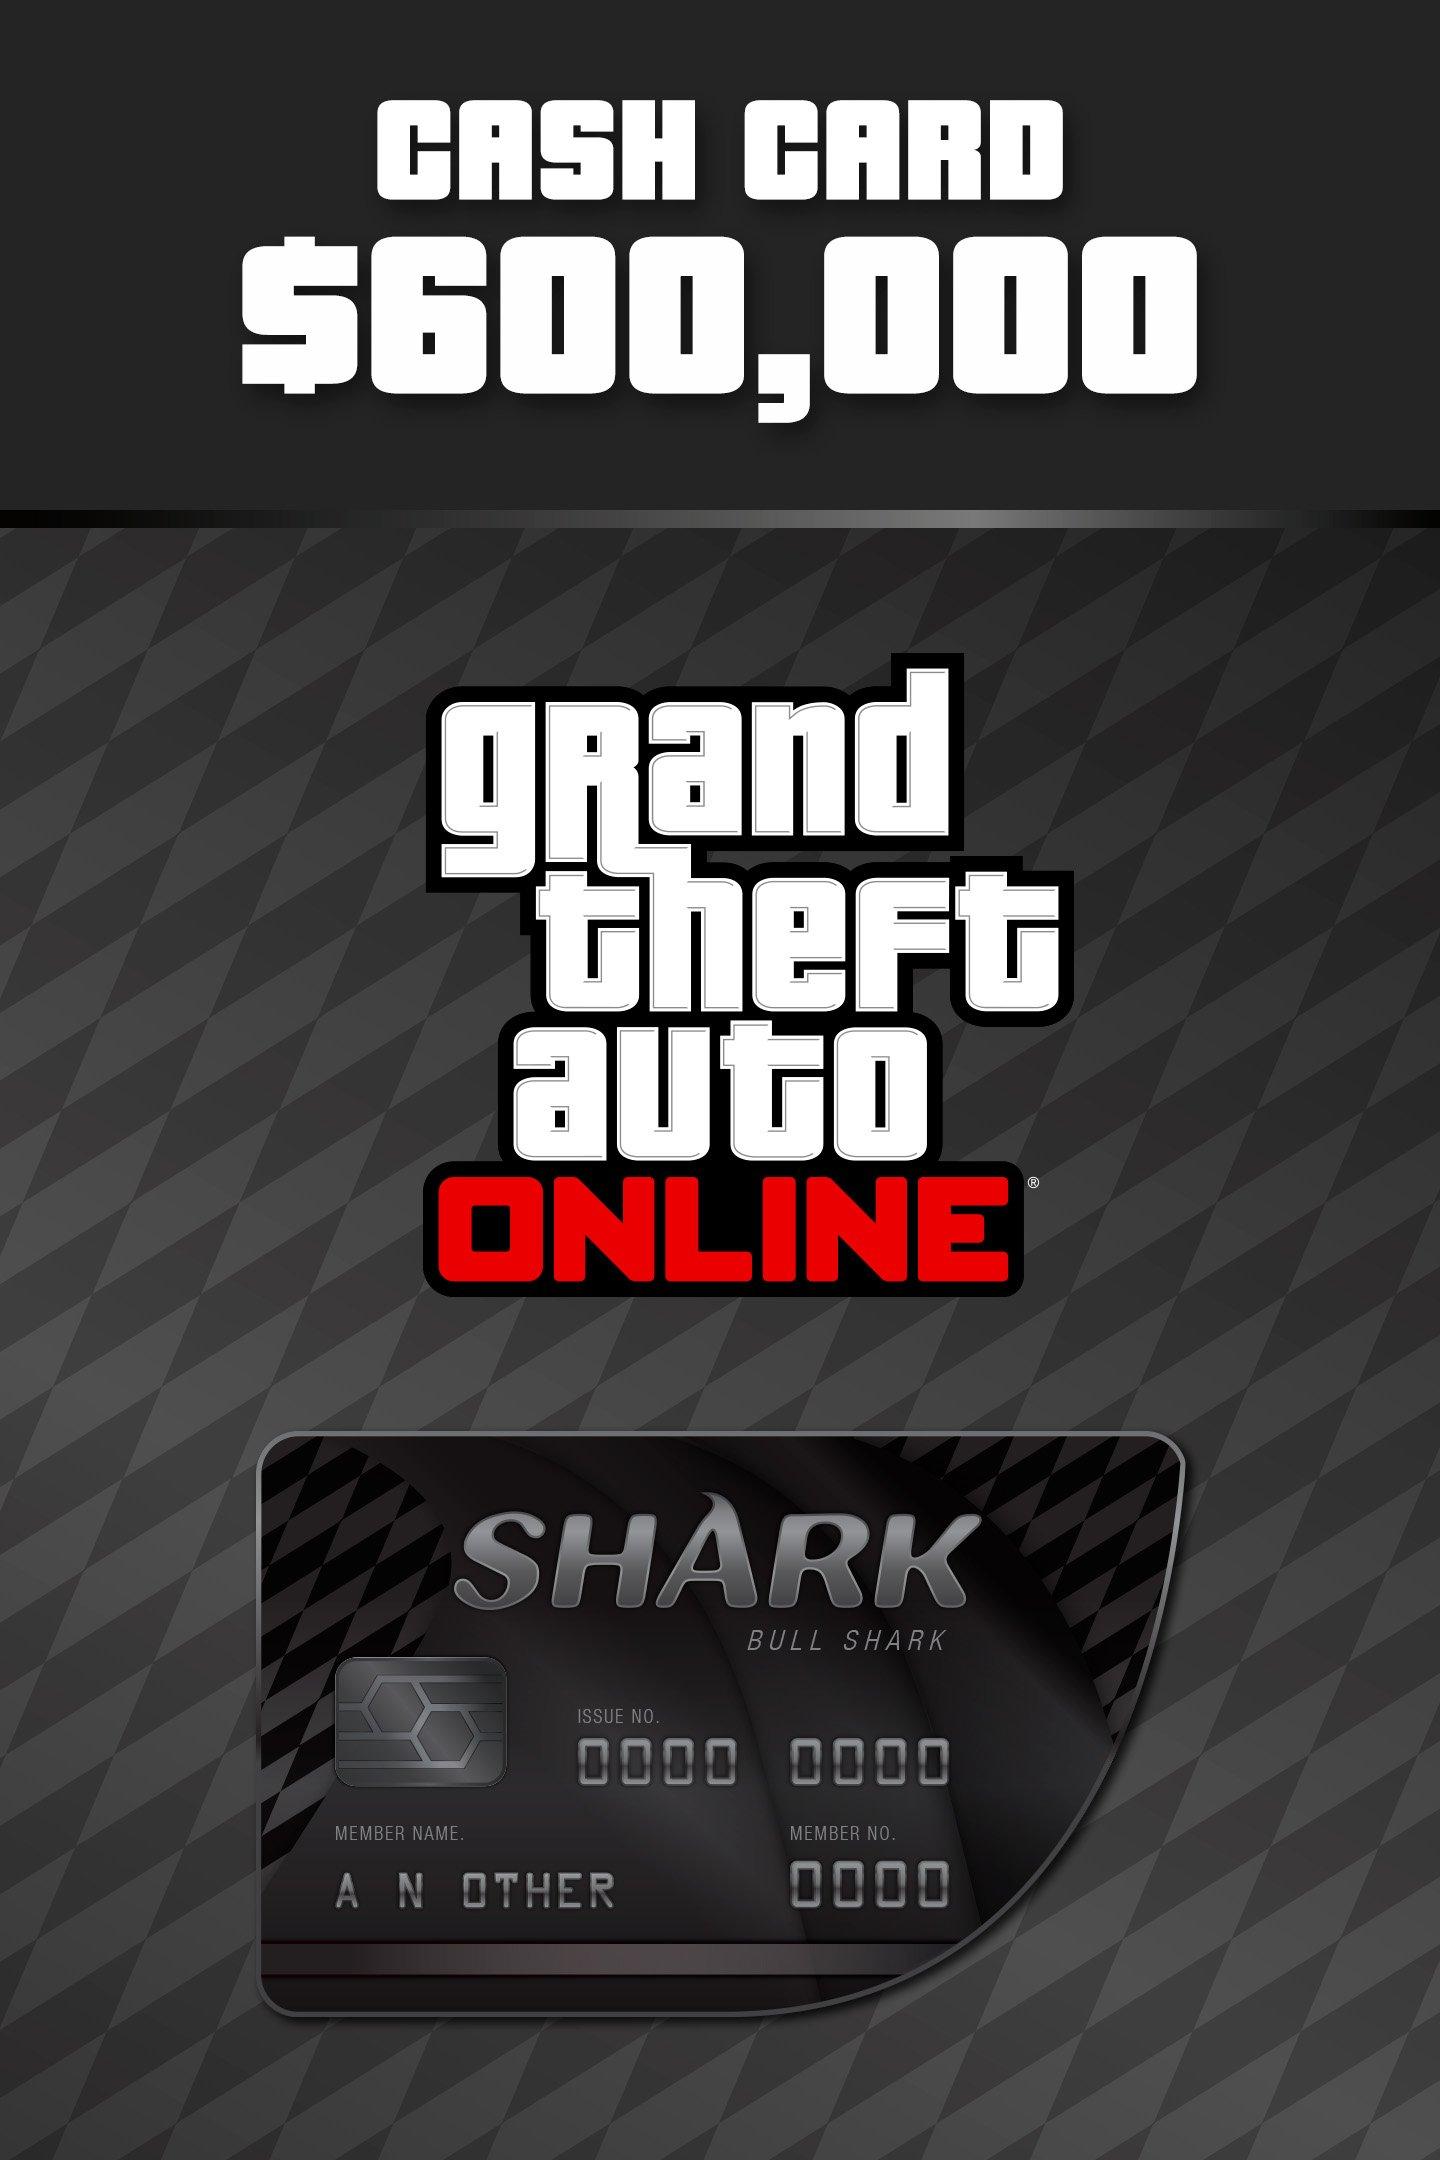 Grand Theft Auto Online: The Bull Shark Cash Card